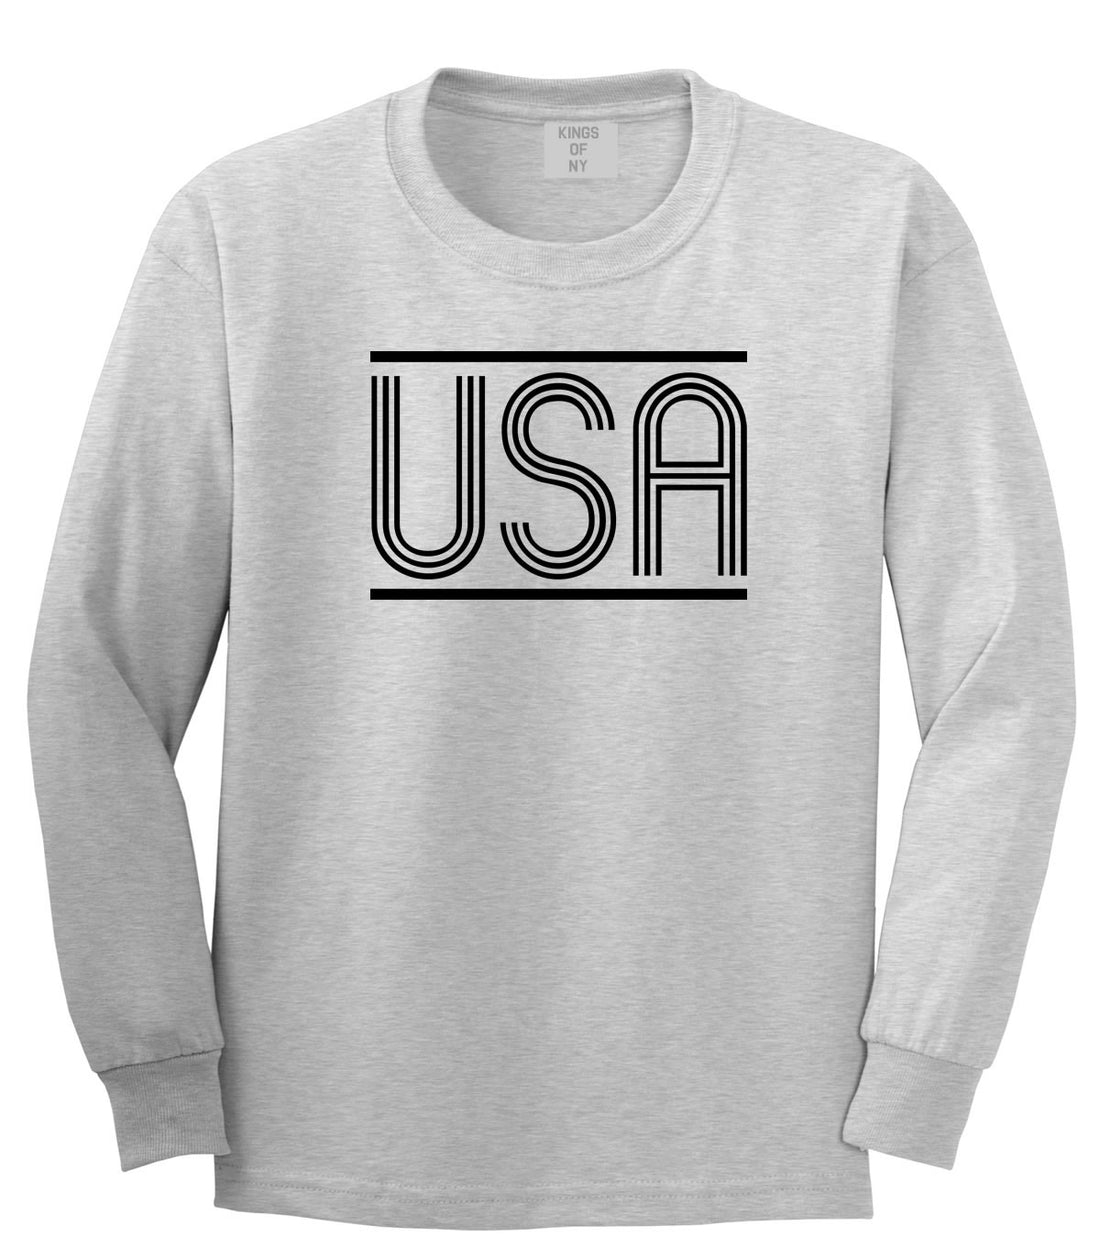 USA America Fall15 Boys Kids Long Sleeve T-Shirt in Grey by Kings Of NY